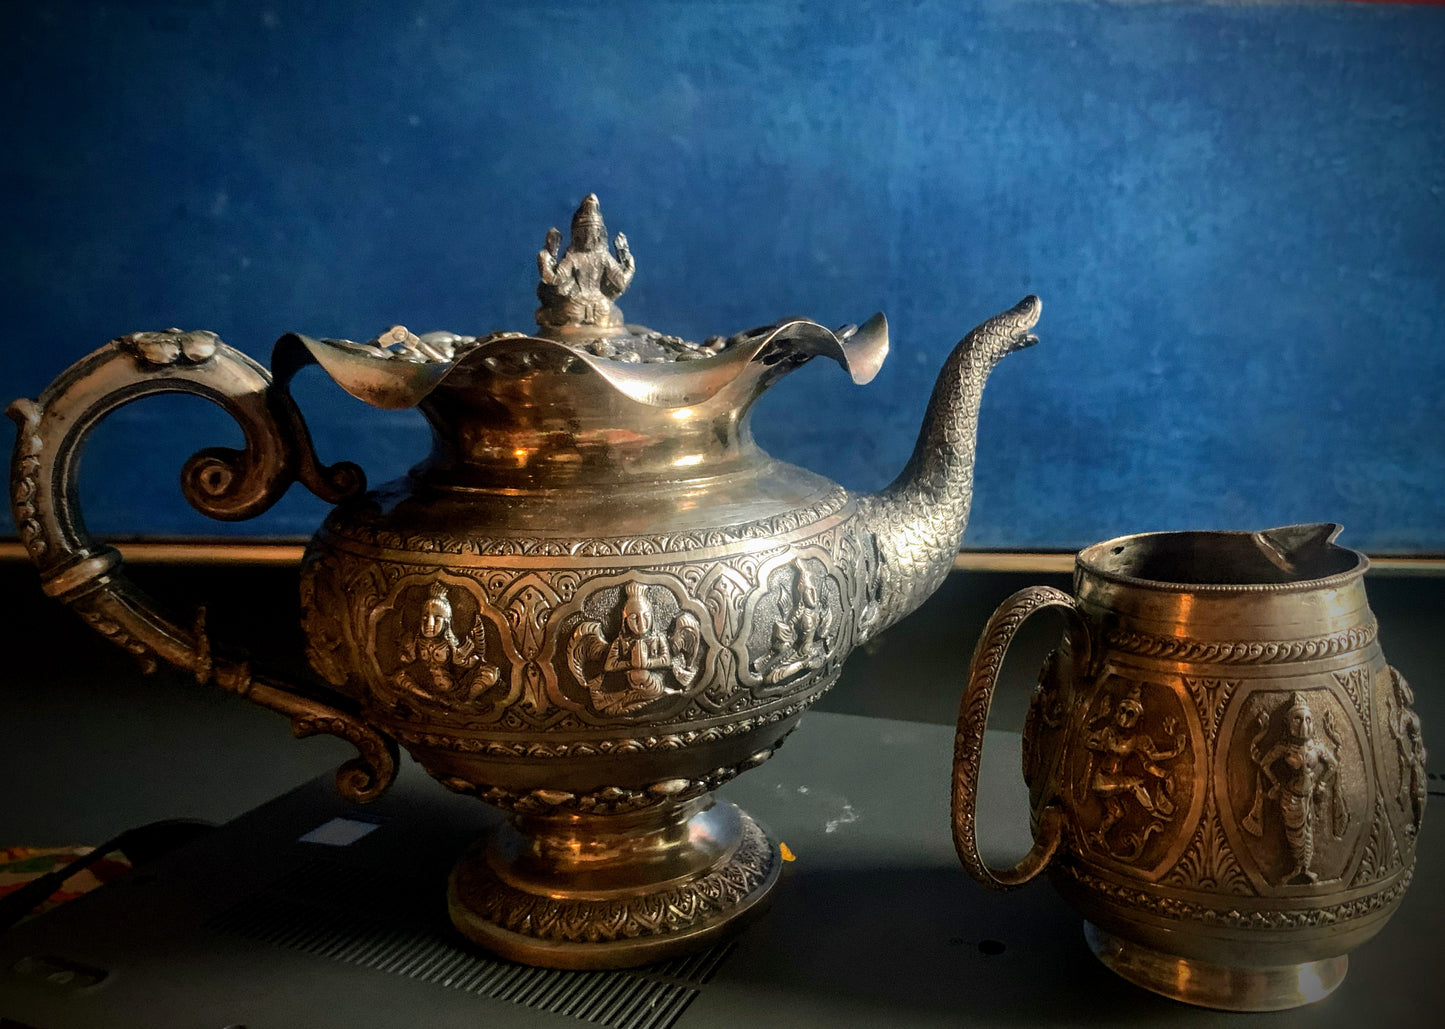 A silver tea set